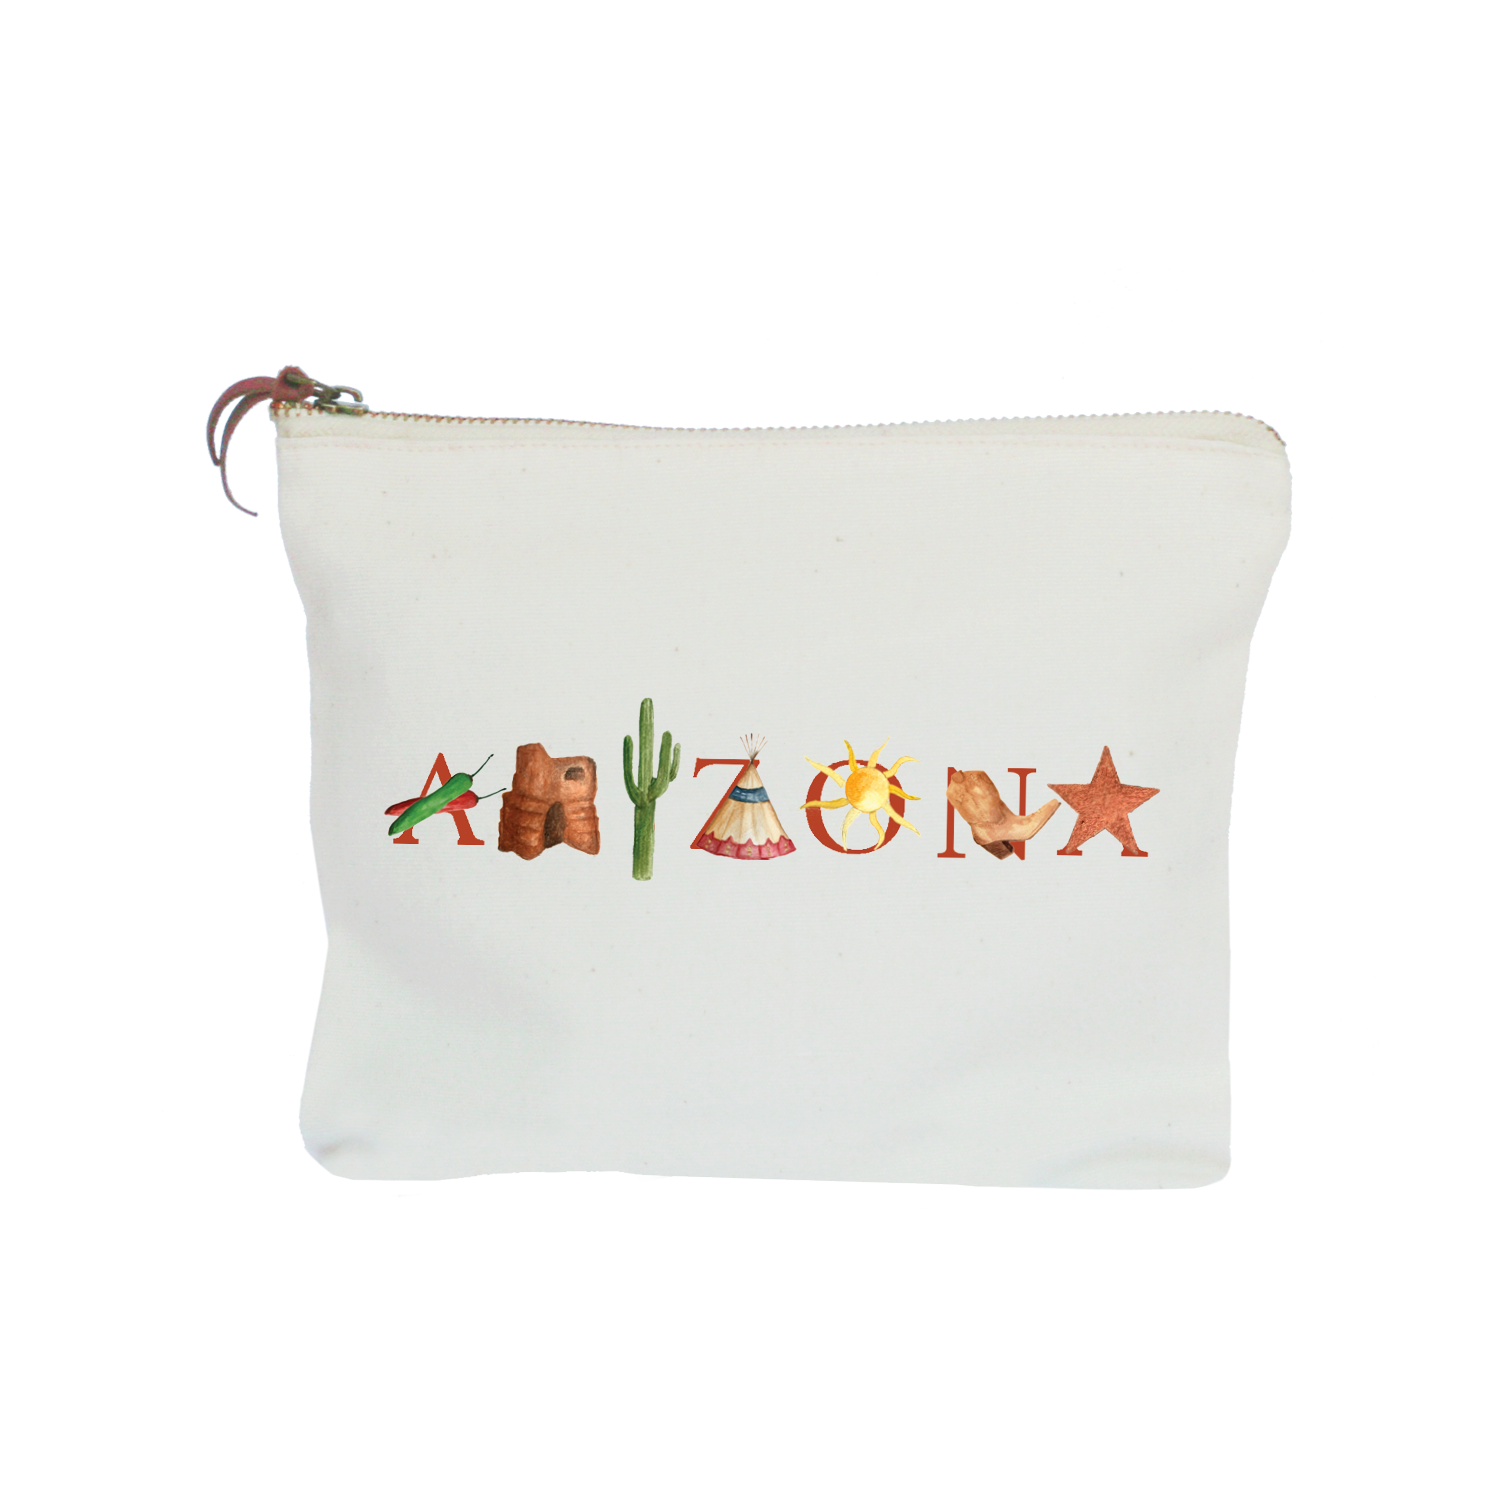 Arizona zipper pouch